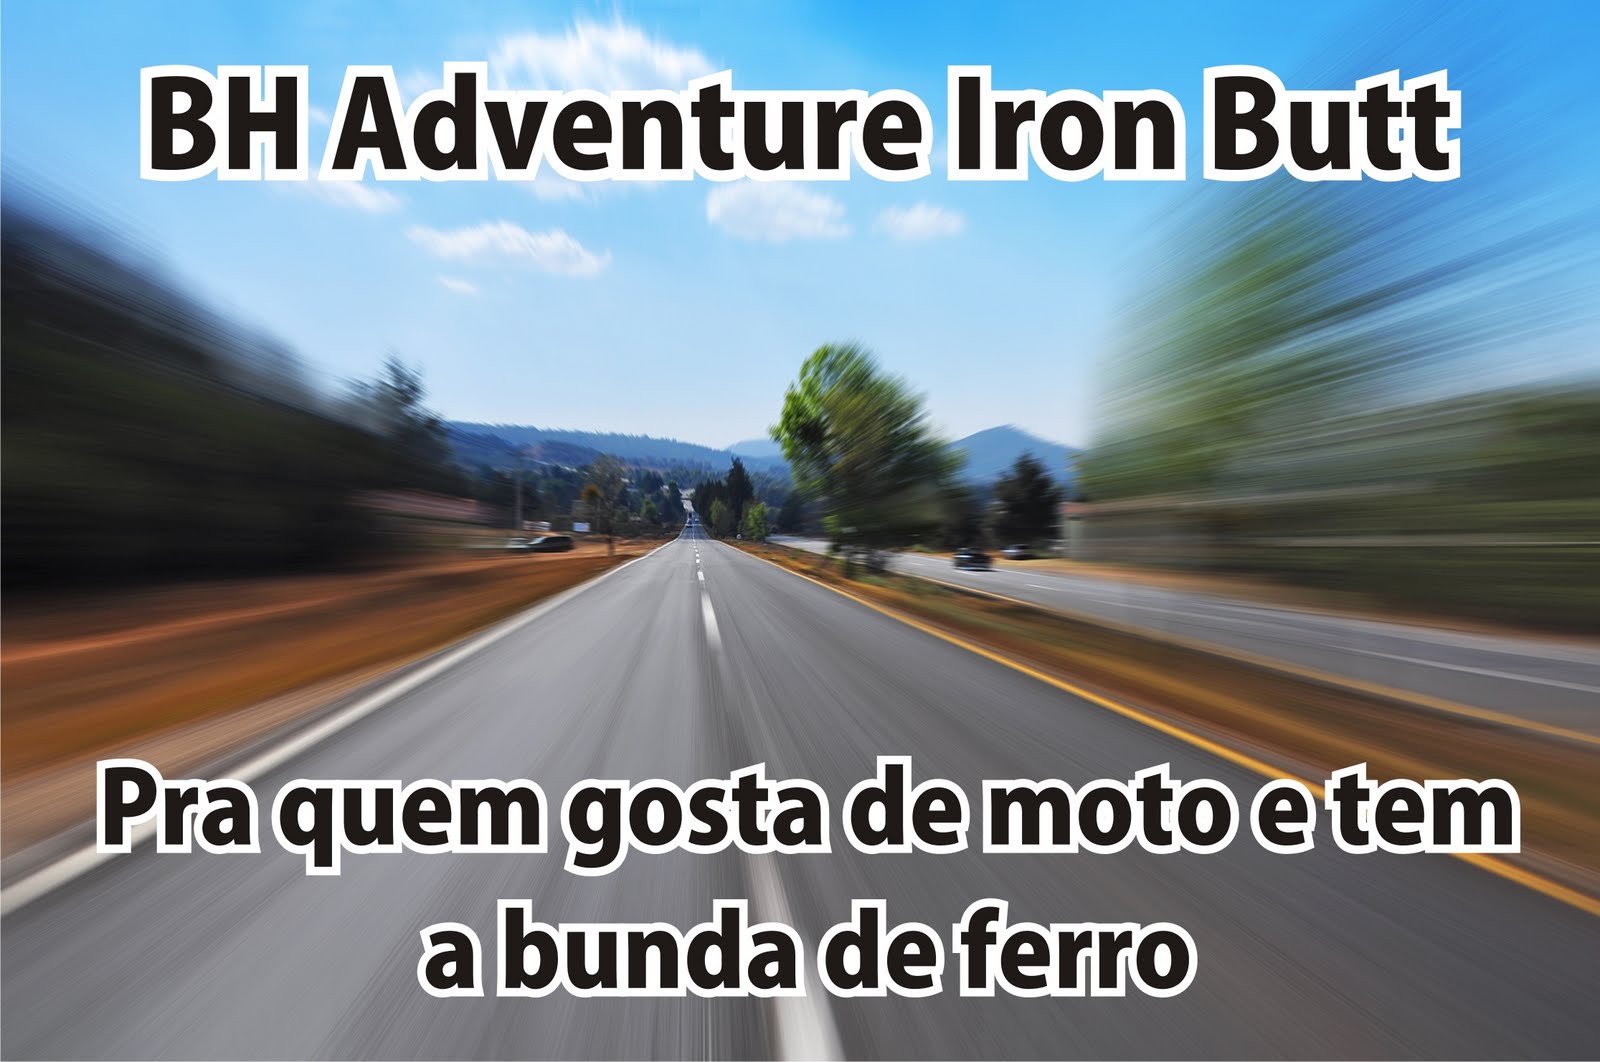 BH Adventure Iron Butt